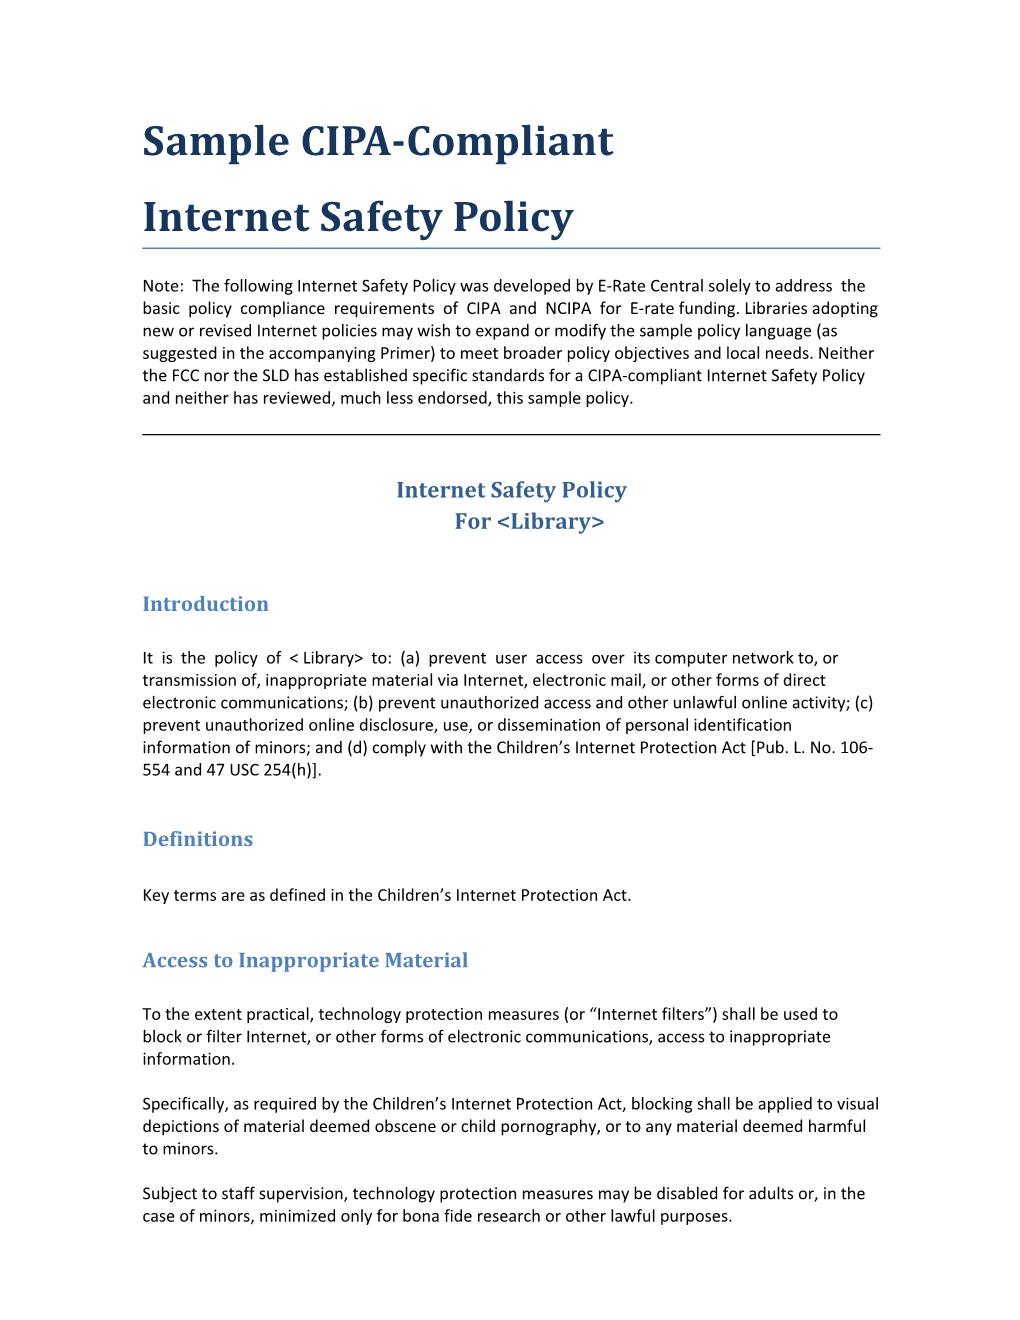 Internet Safety Policies and CIPA